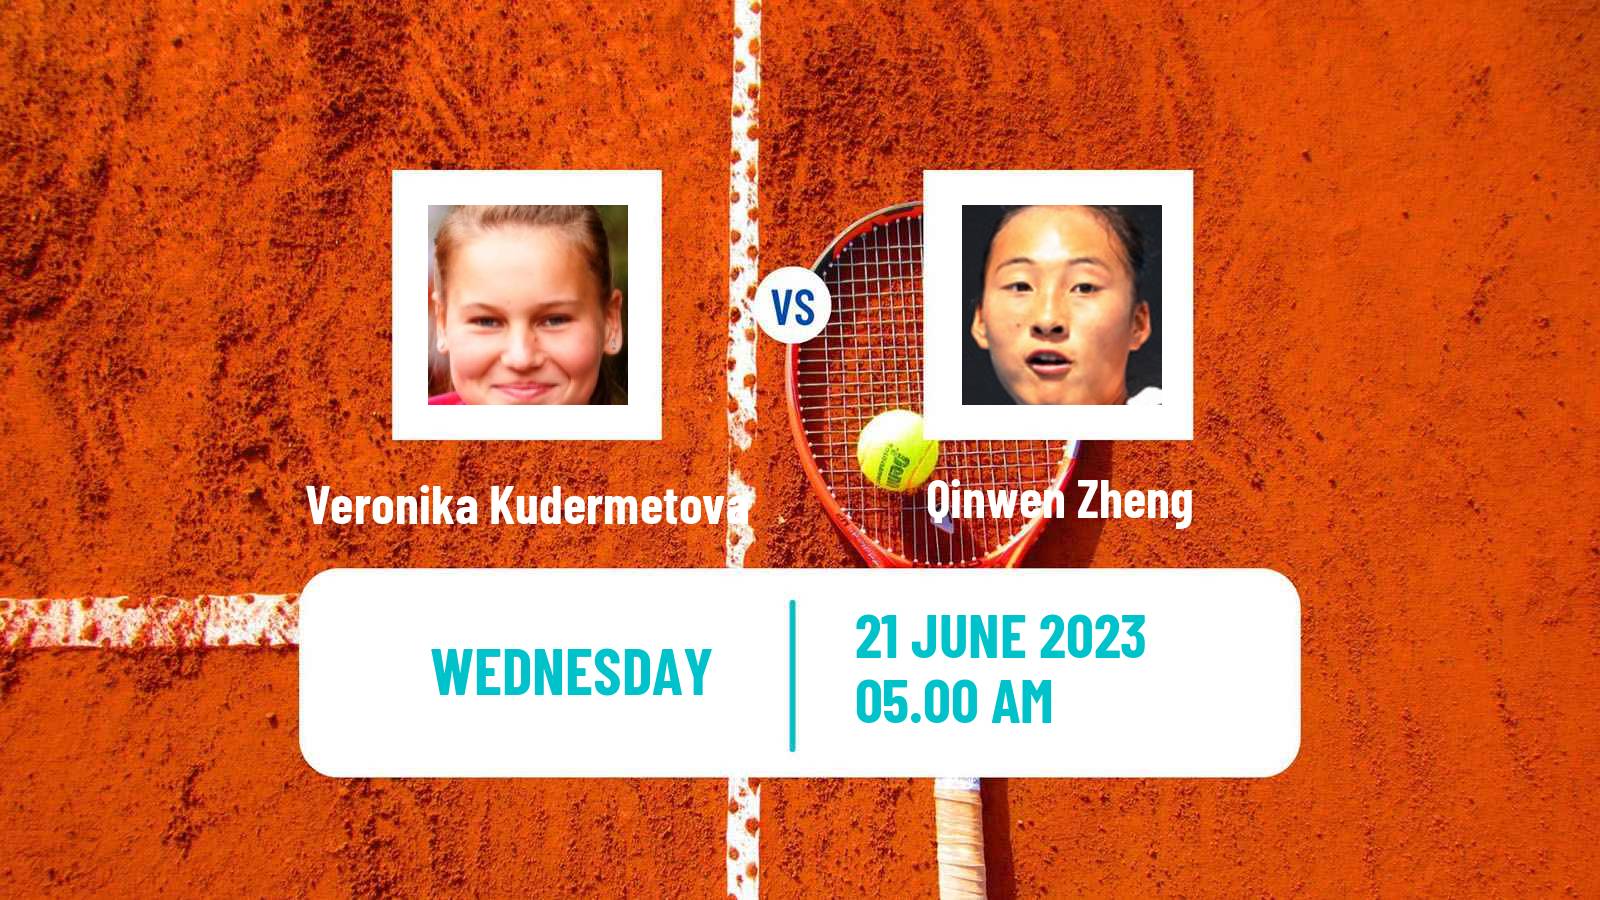 Tennis WTA Berlin Veronika Kudermetova - Qinwen Zheng